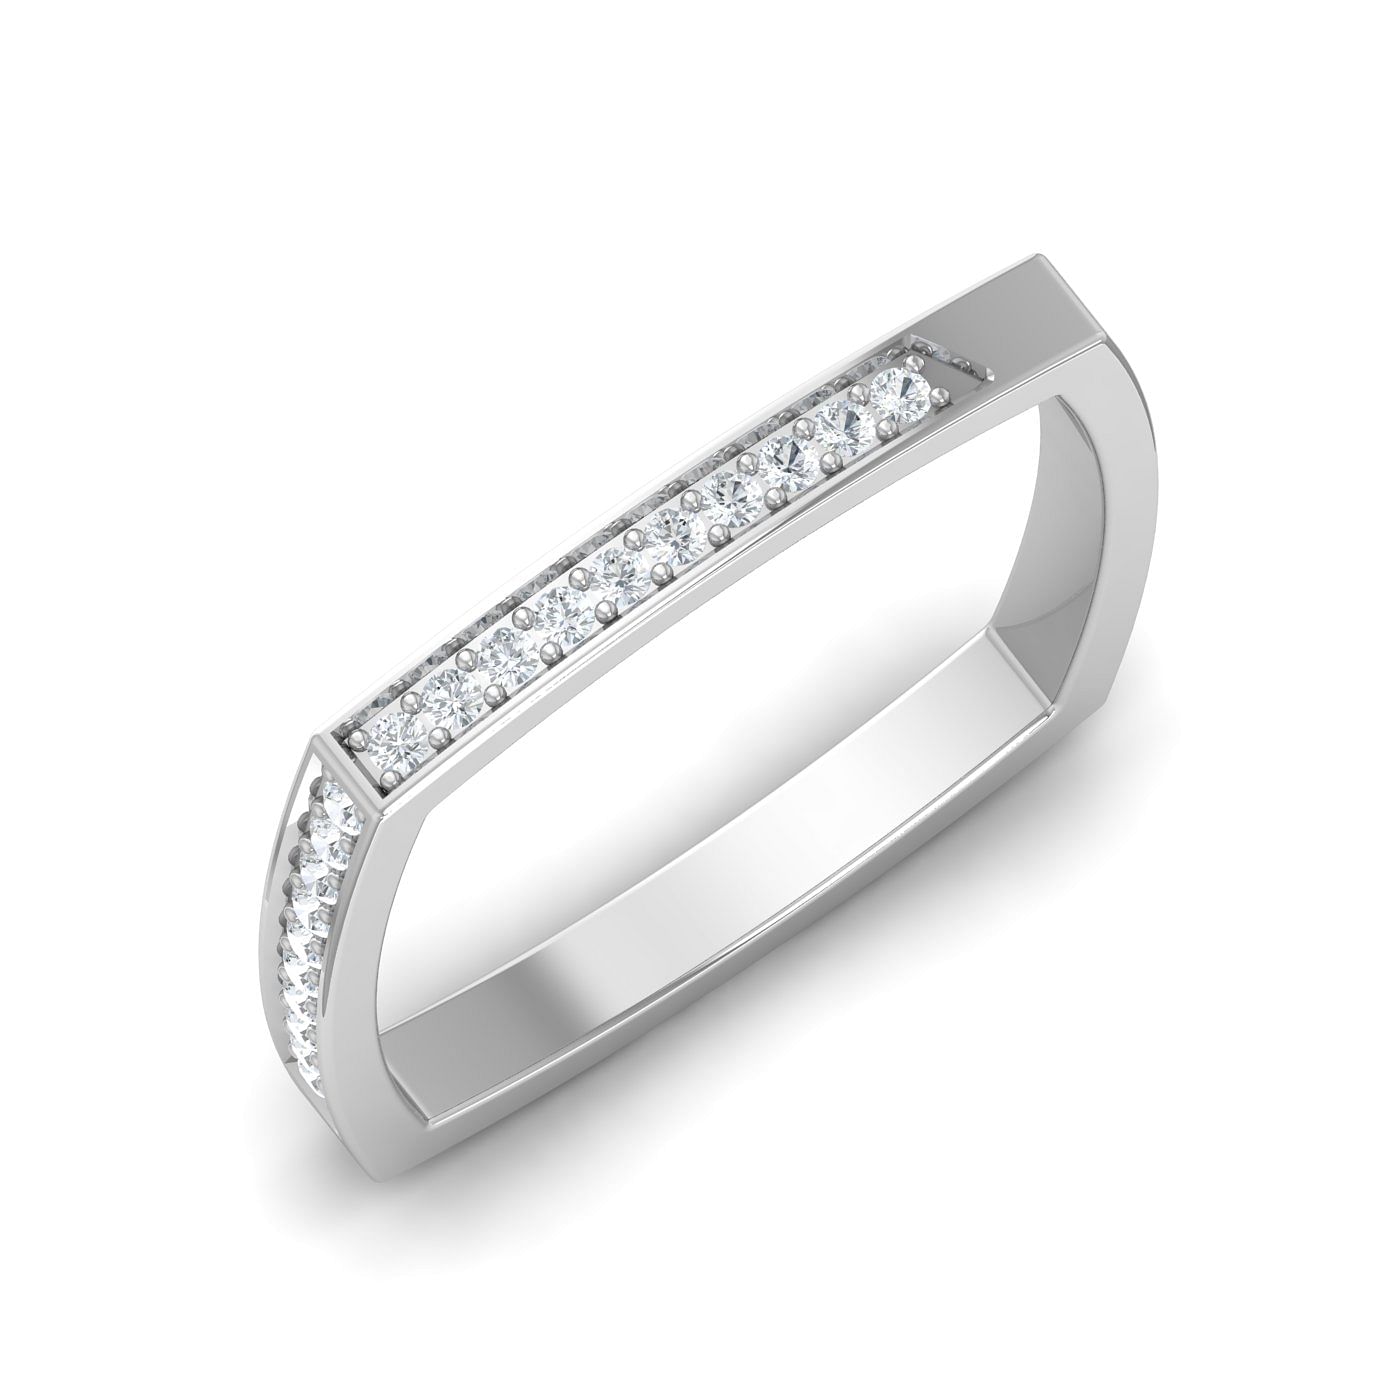 Square Design White Gold Diamond Ring Band For Women